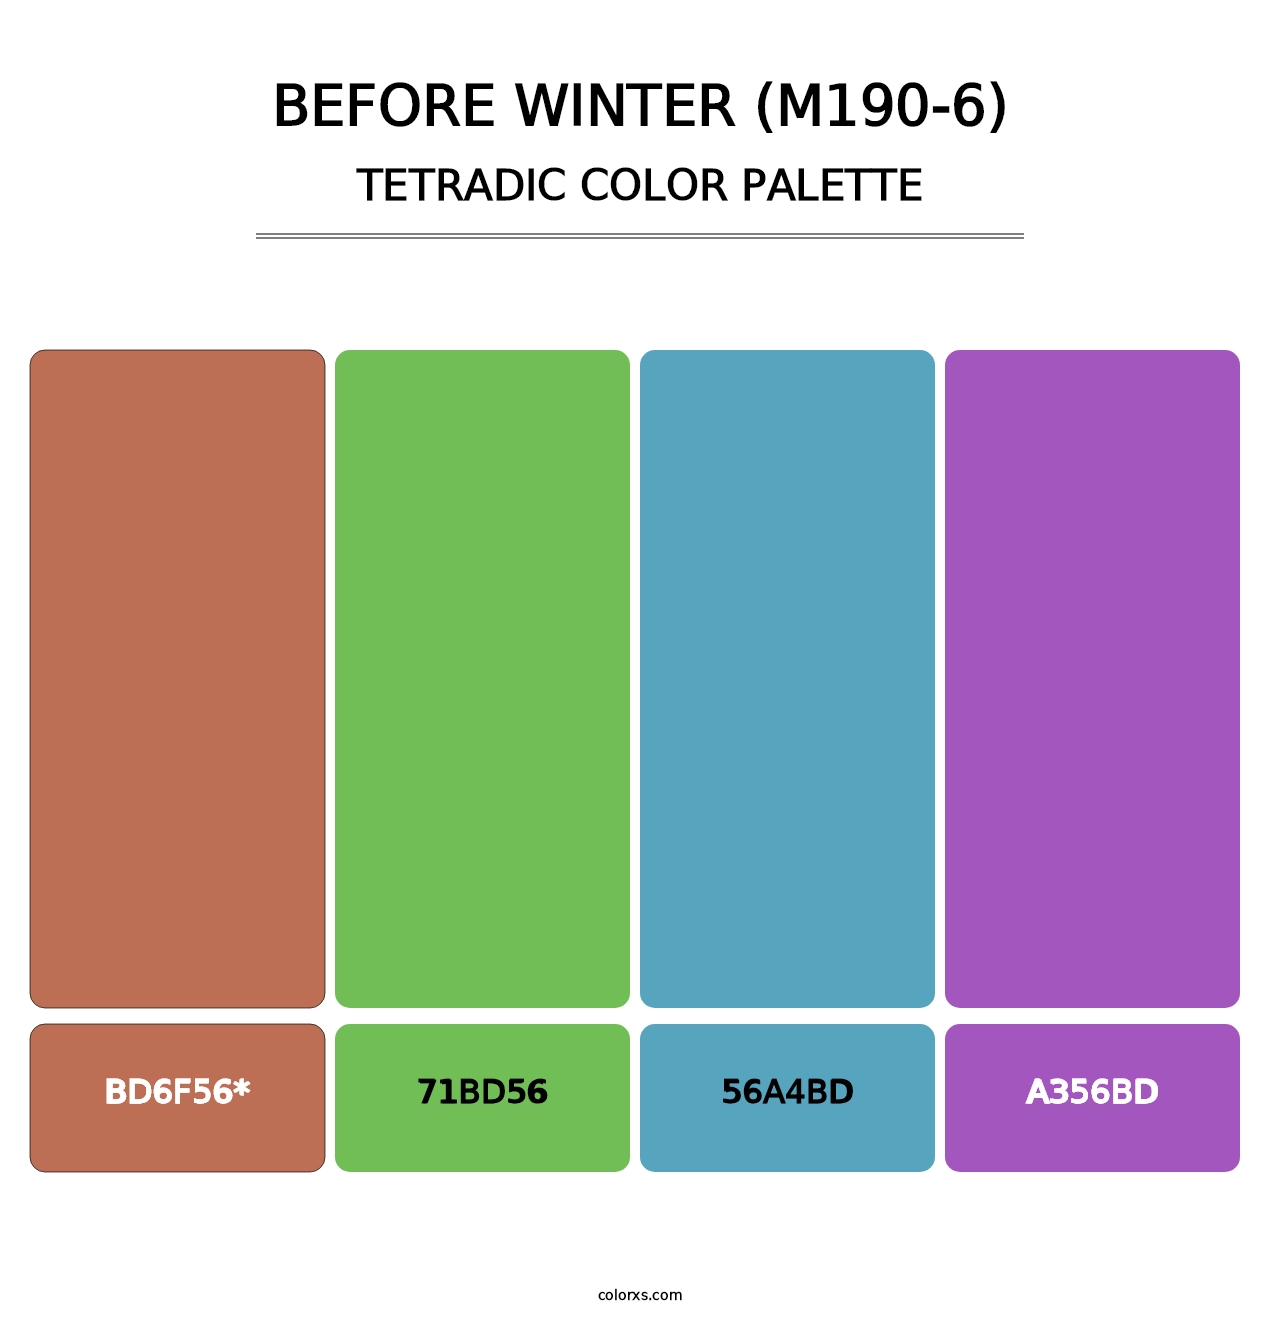 Before Winter (M190-6) - Tetradic Color Palette